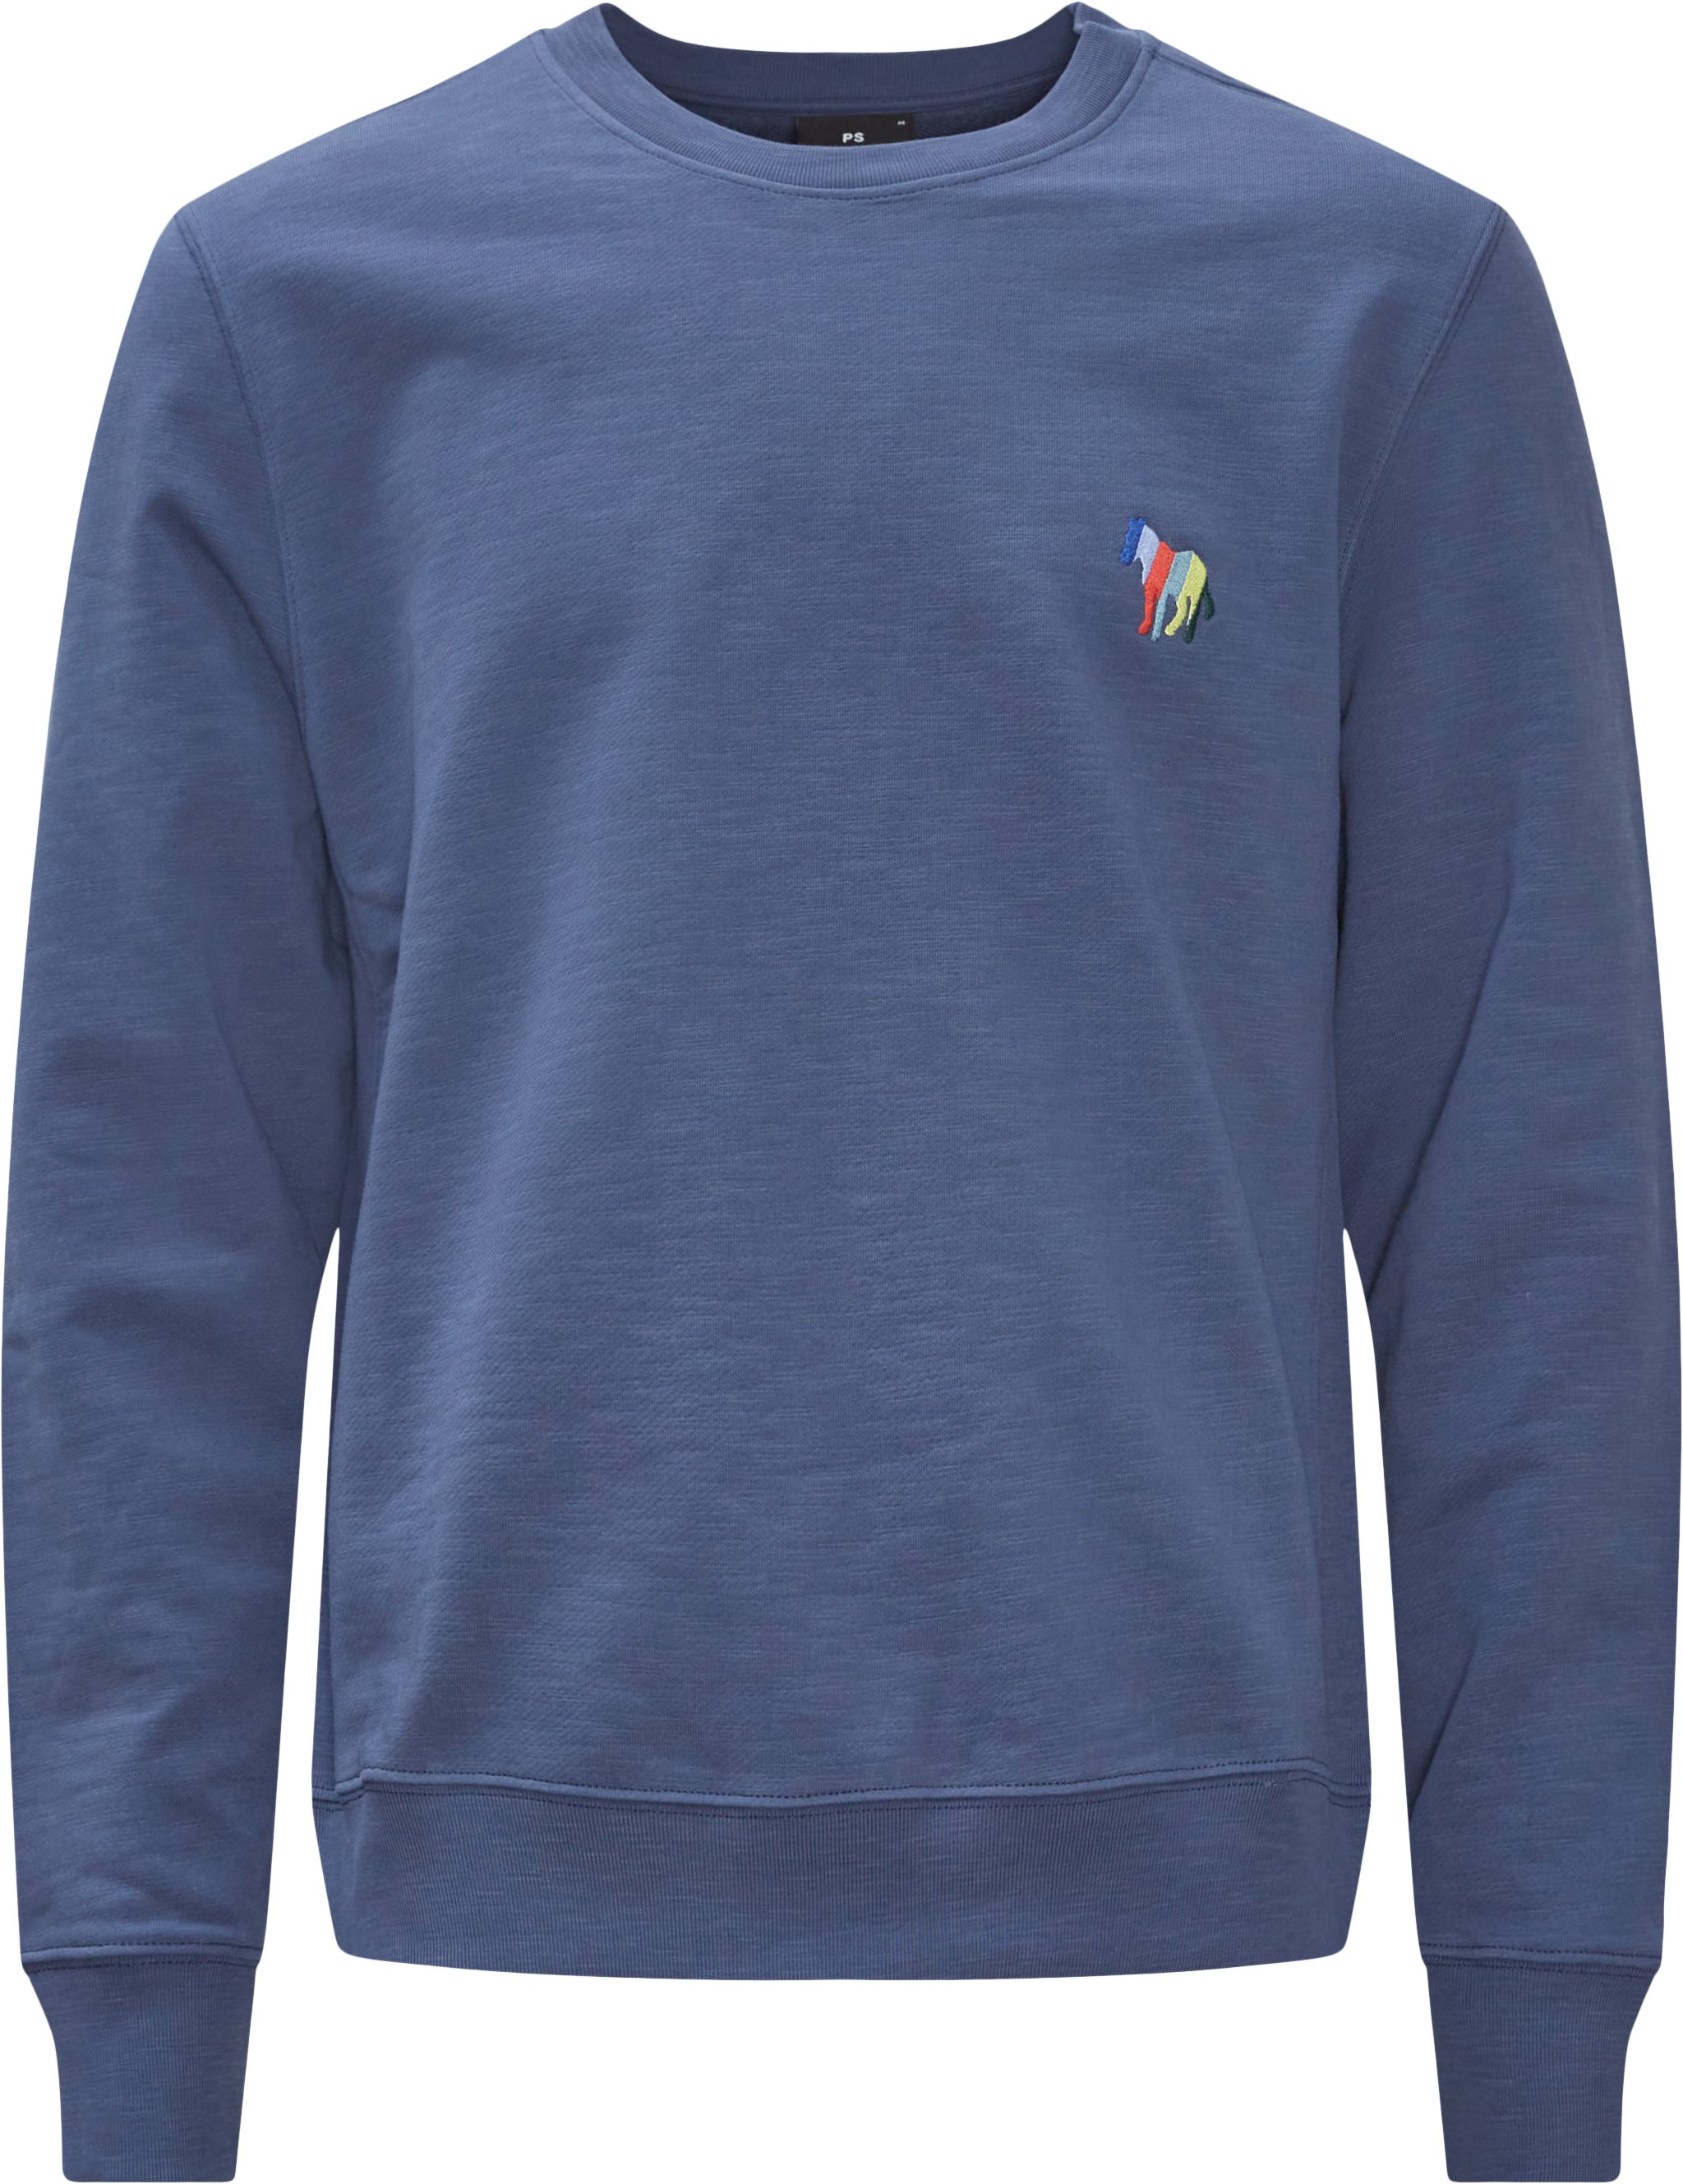 Zebra Emb Sweatshirt - Sweatshirts - Regular fit - Blue